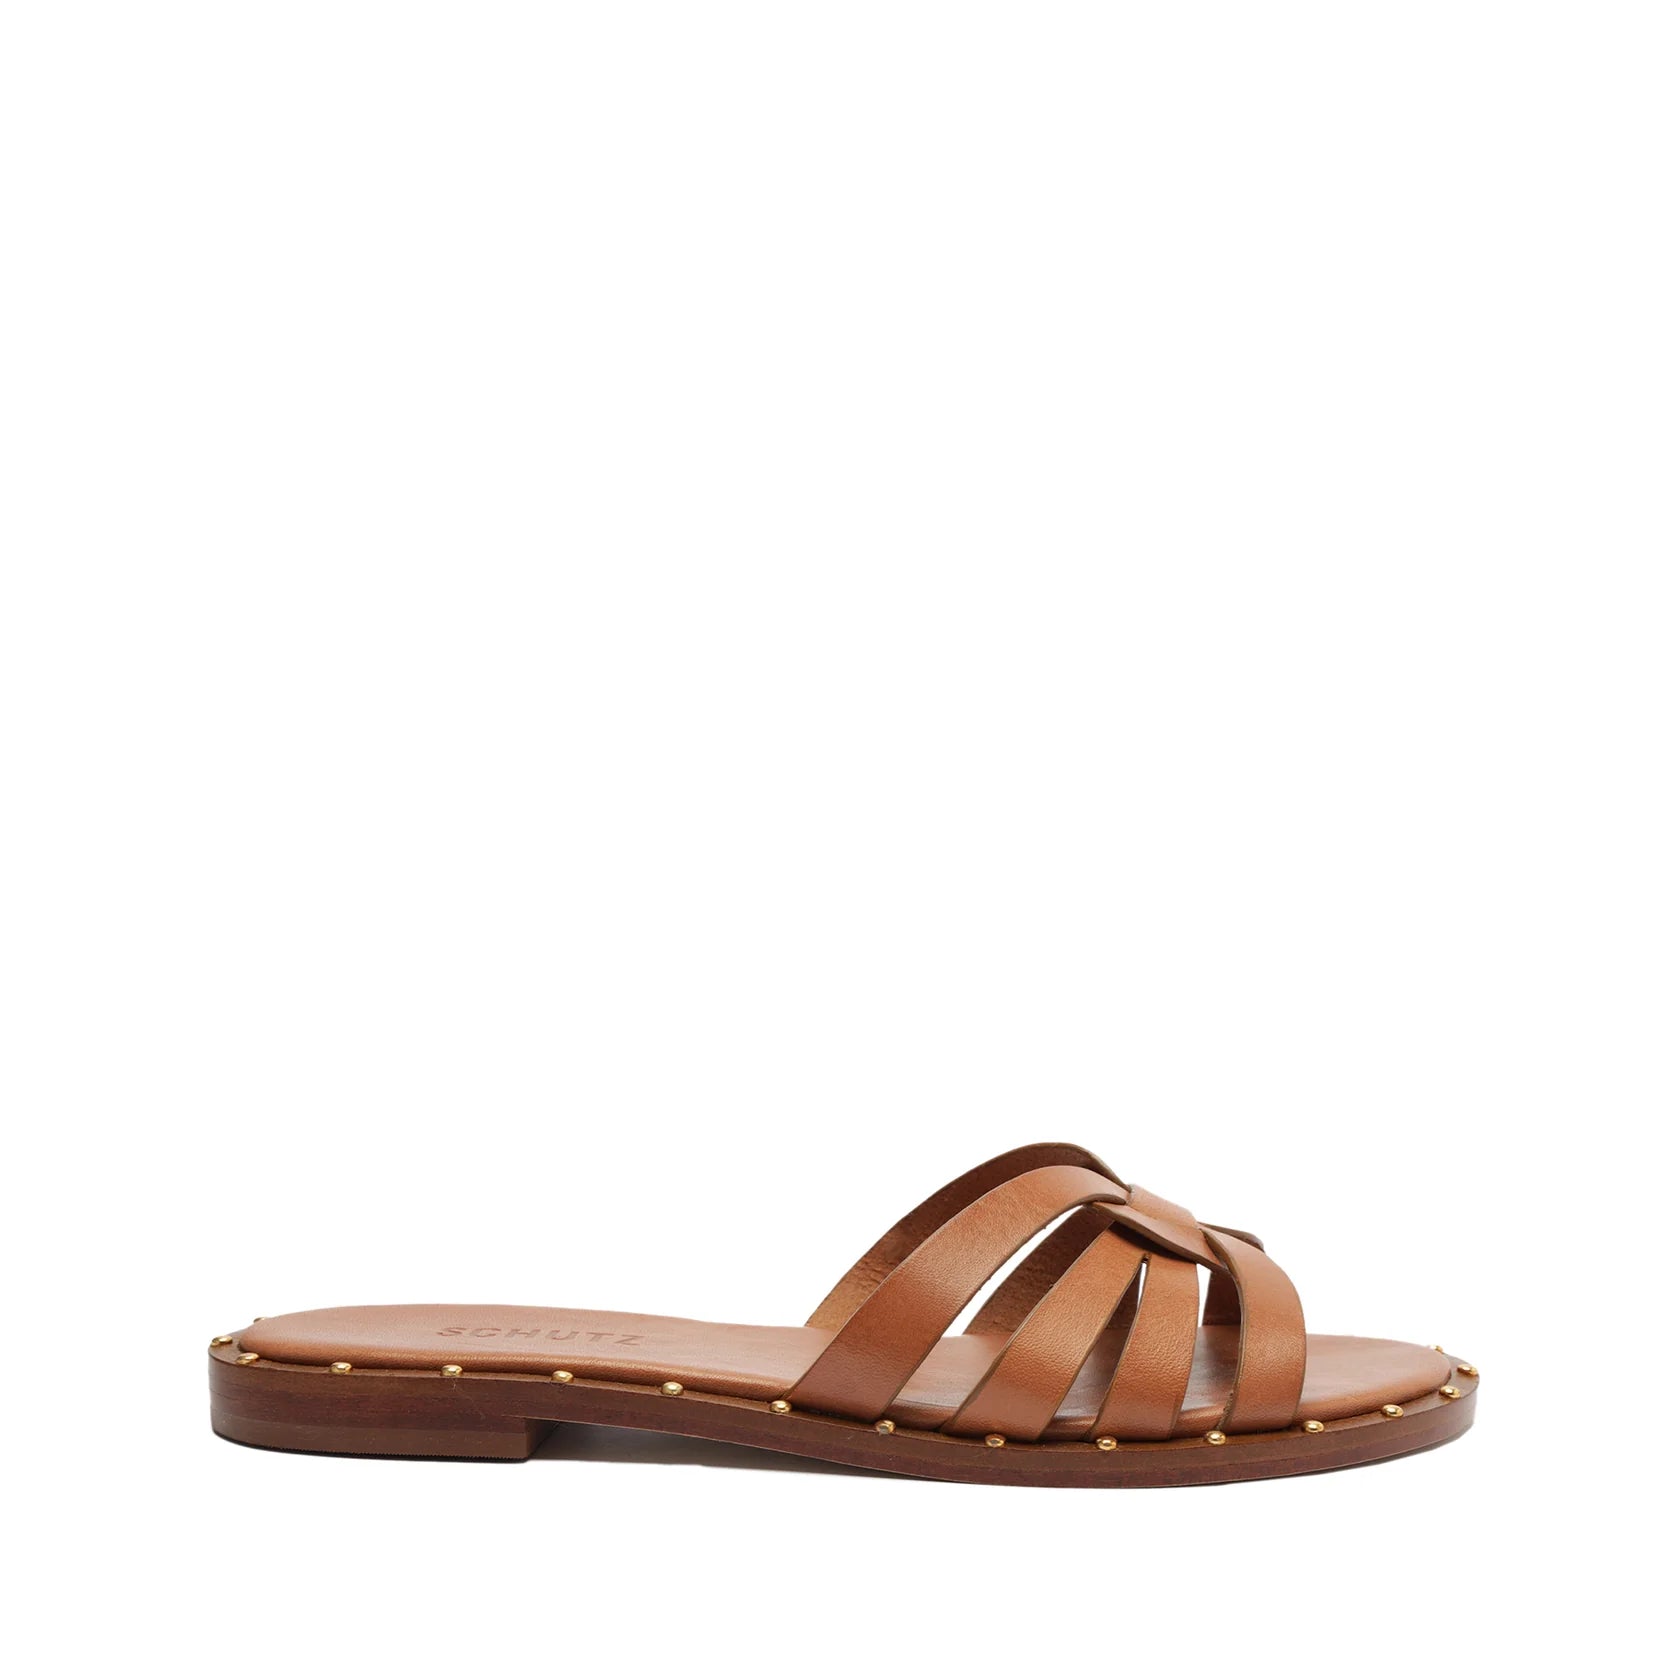 Tiyah - Black, 3.5 or 4 inch Stiletto Heel, Strappy Open Toe Vegan Lace Up  Sandal - Burju Shoes